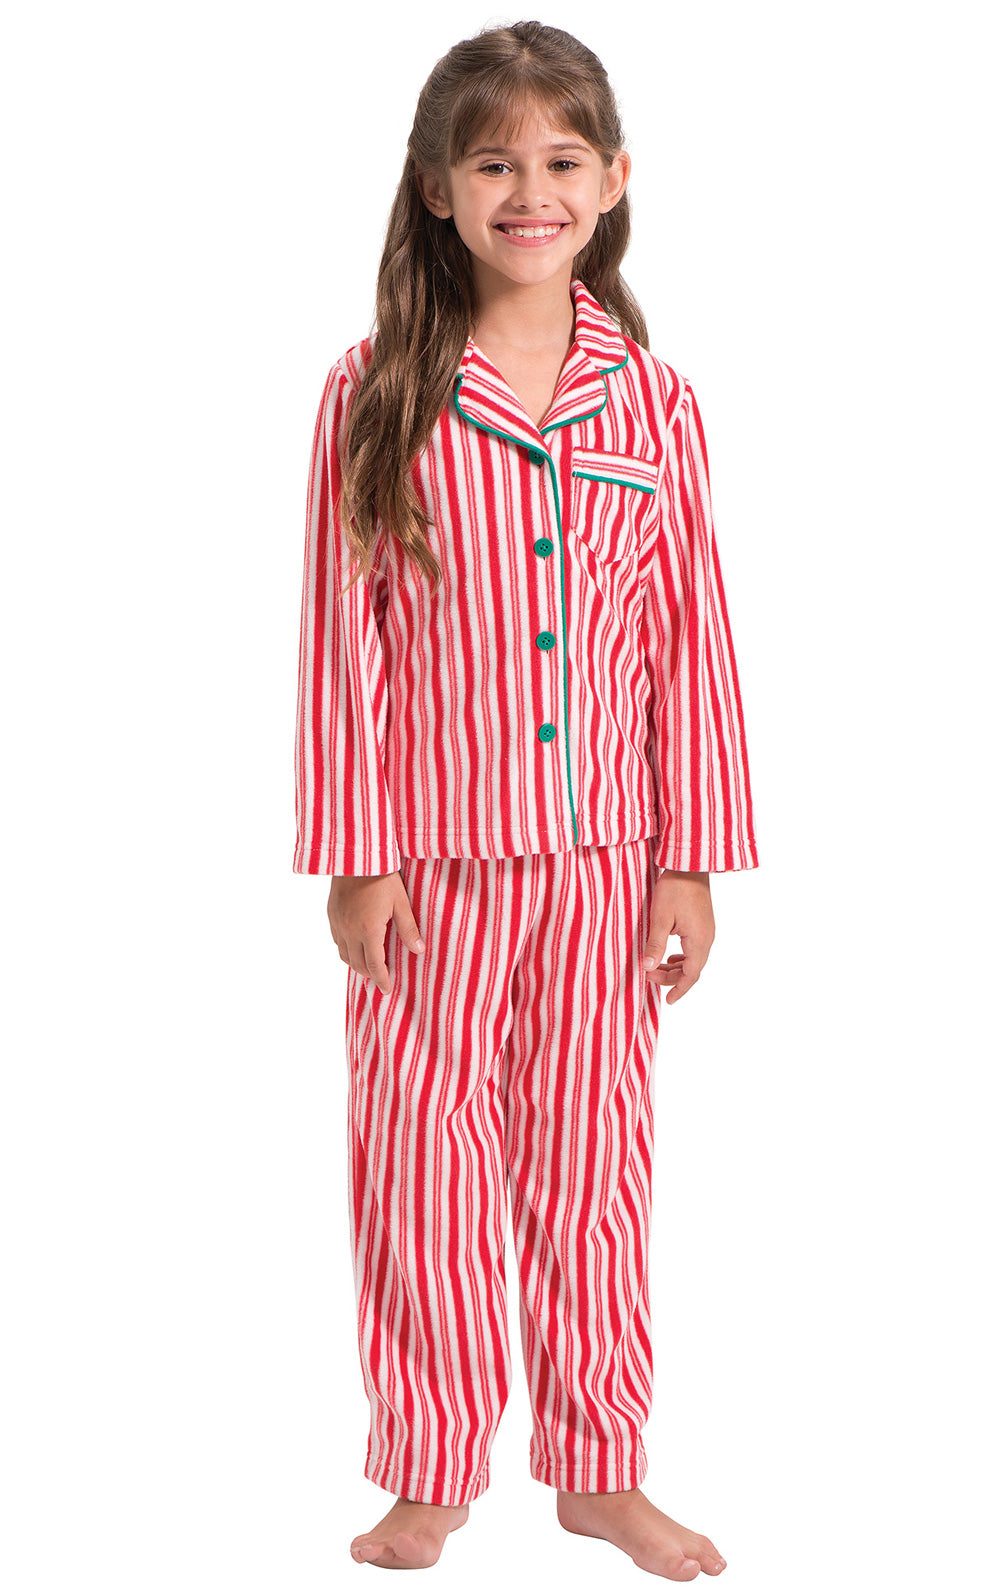 Candy Cane Fleece Kids Pajamas - Girls